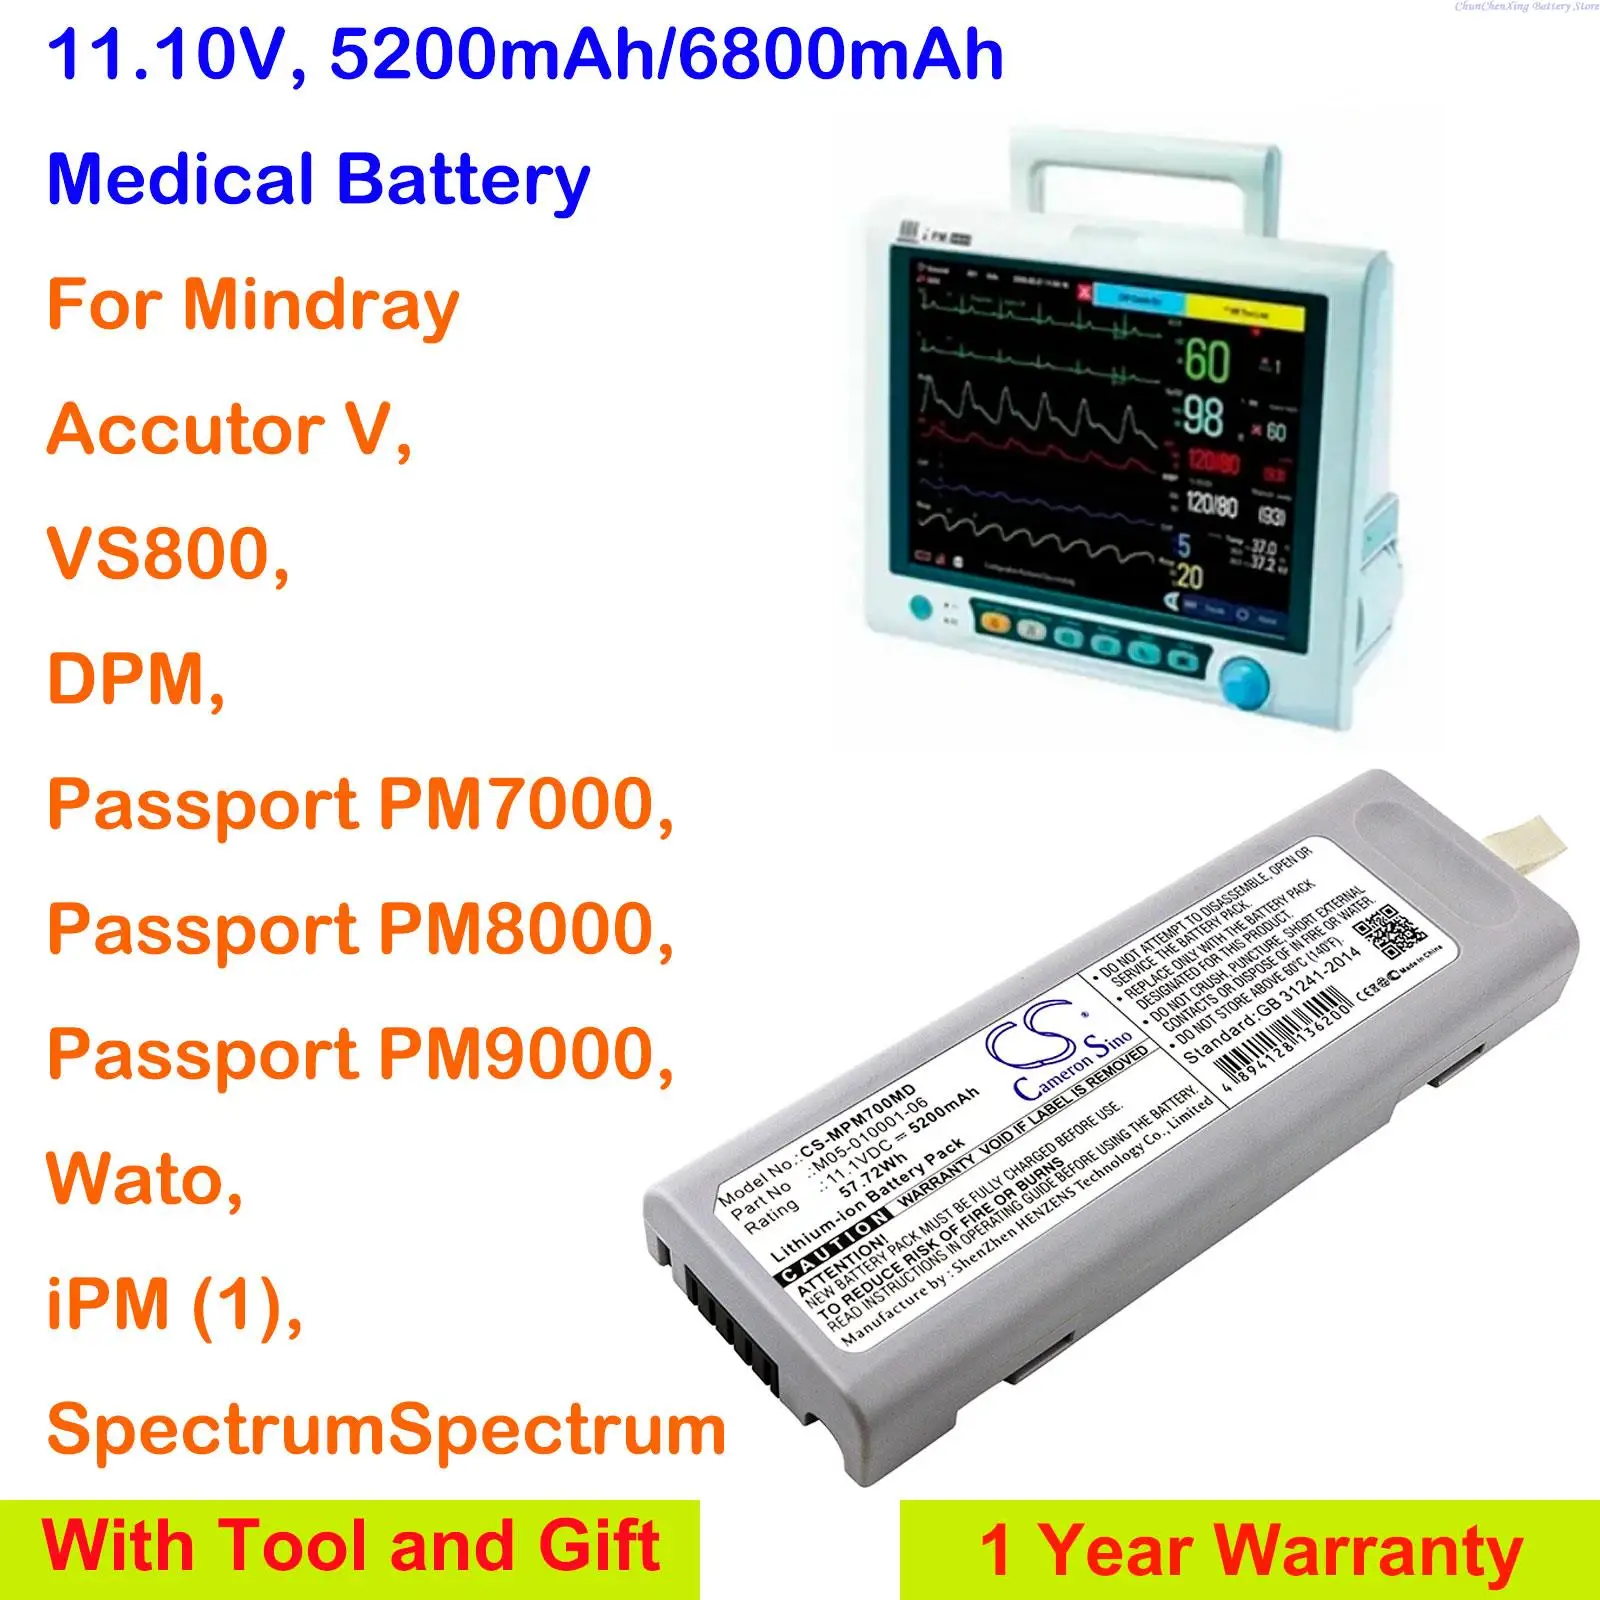 

CS 5200mAh/6800mAh Battery for Mindray Accutor V,VS800,DPM,Passport PM7000,PM8000,PM9000,Wato,iPM(1),SpectrumSpectrum,